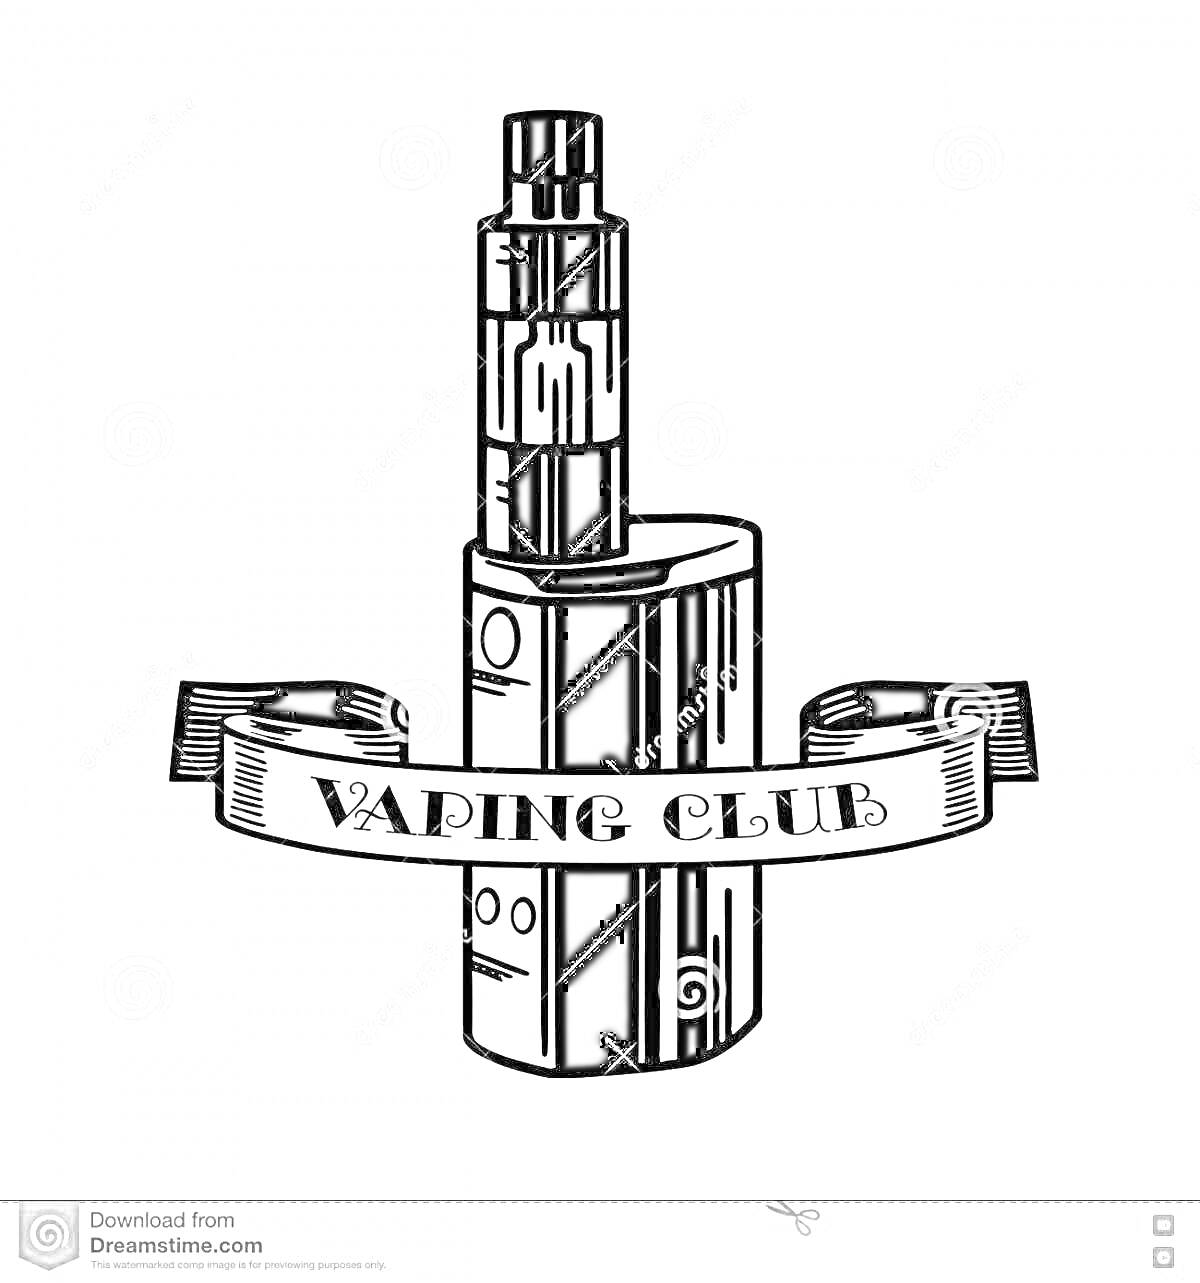 На раскраске изображено: Электронная сигарета, Вейп, Вейпинг, Клуб, Лента, Курение, Парение